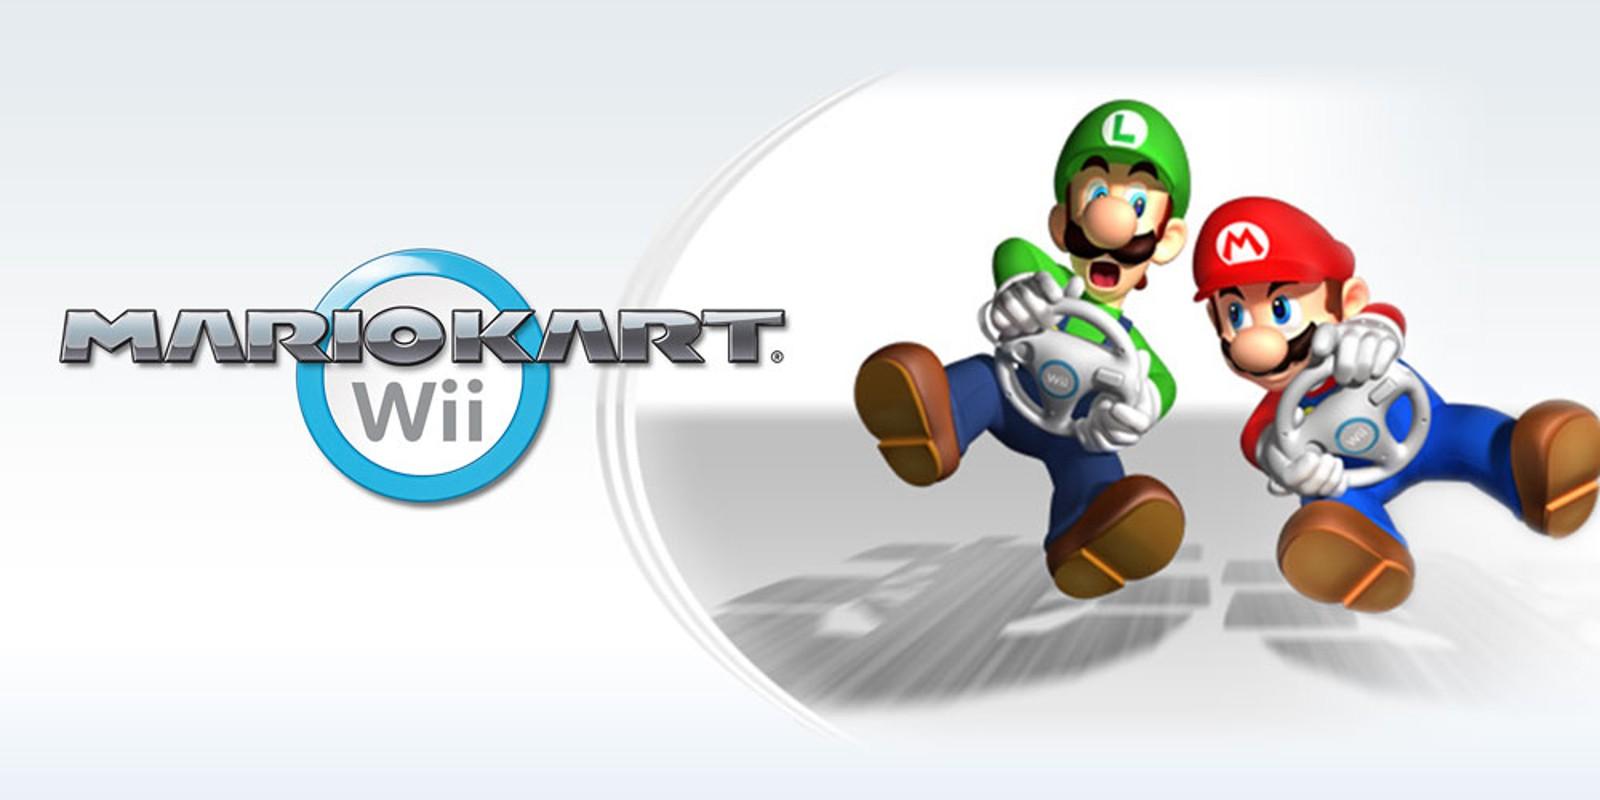 SI_Wii_MarioKartWii_image1600w